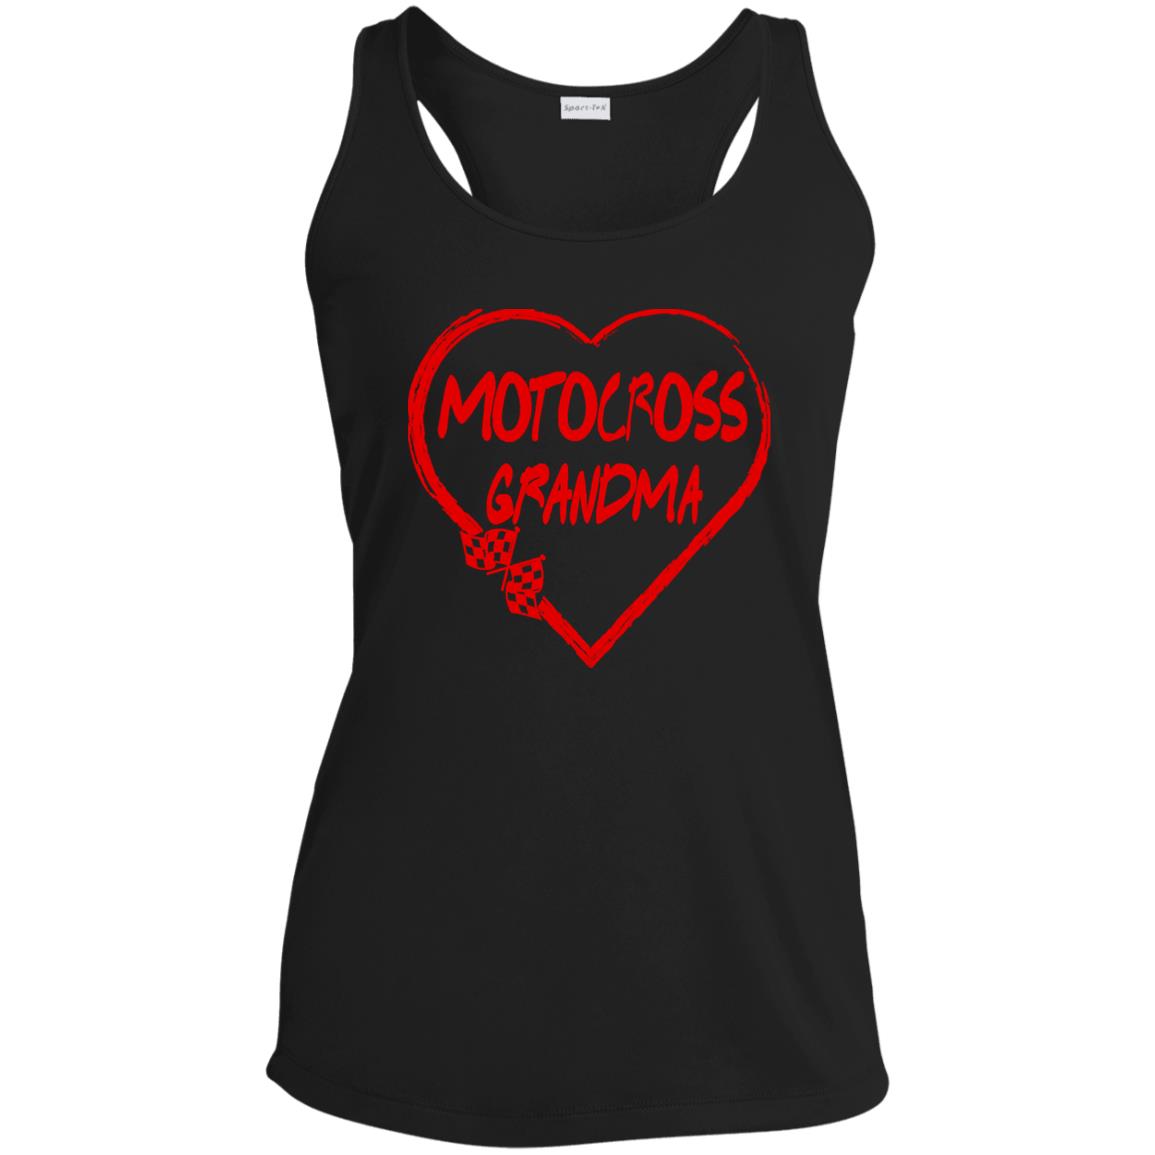 Motocross Grandma Heart Ladies' Performance Racerback Tank